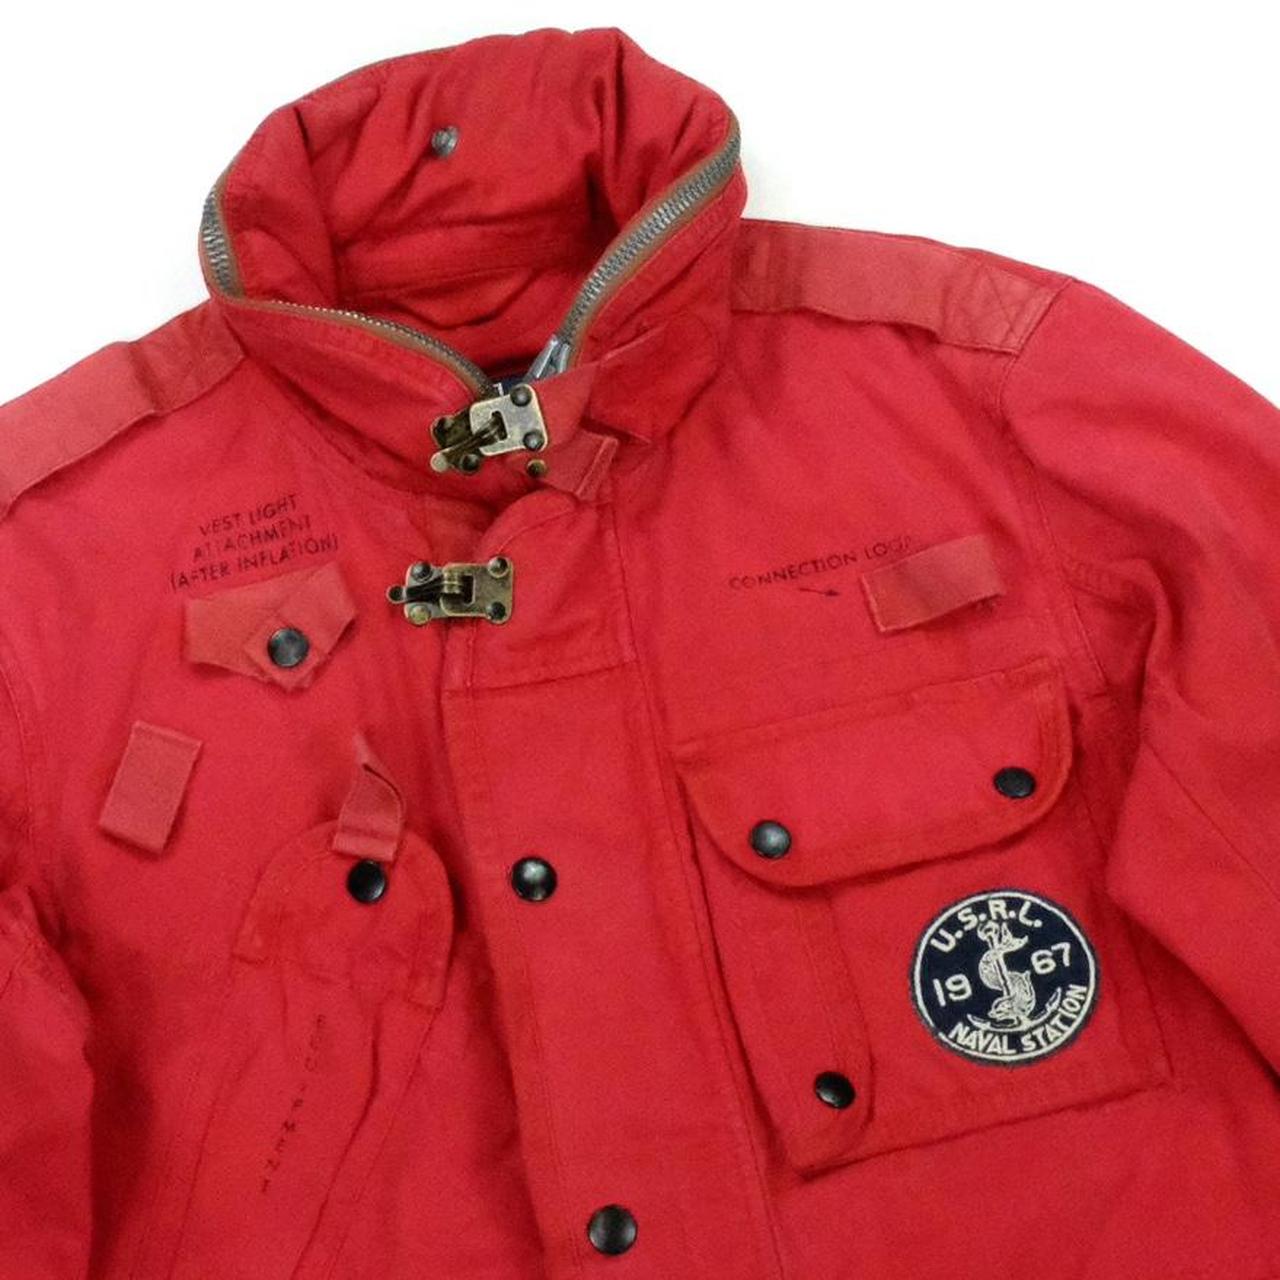 Polo Ralph Lauren Naval Station Jacket